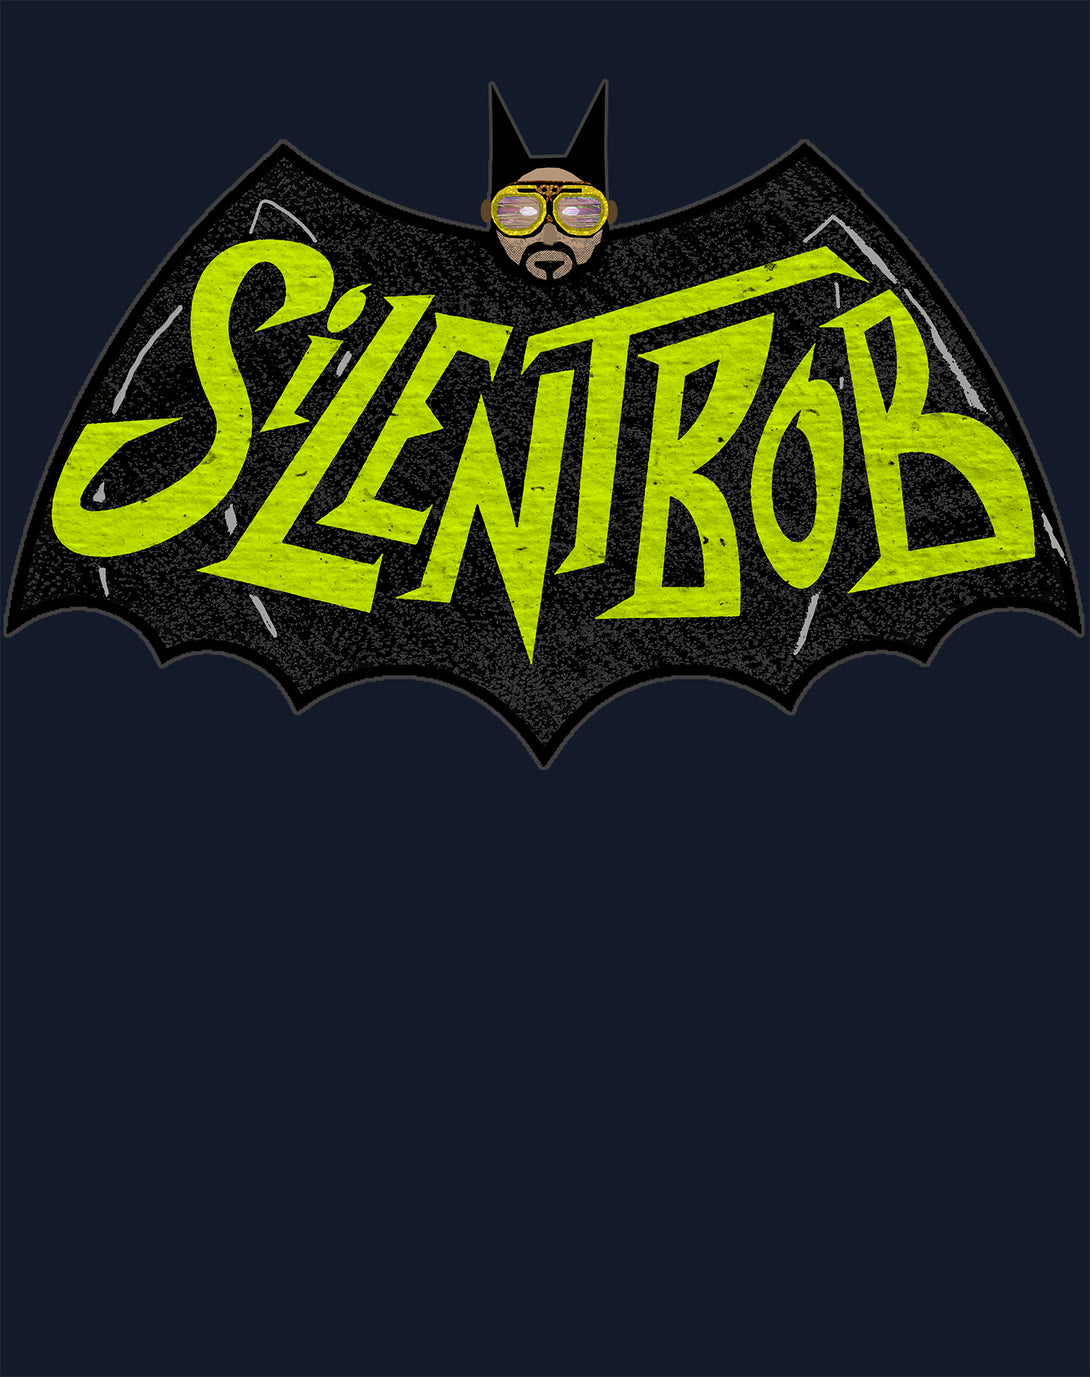 Kevin Smith View Askewniverse Logo Silent Bat Bob Official Women's T-Shirt Navy - Urban Species Design Close Up